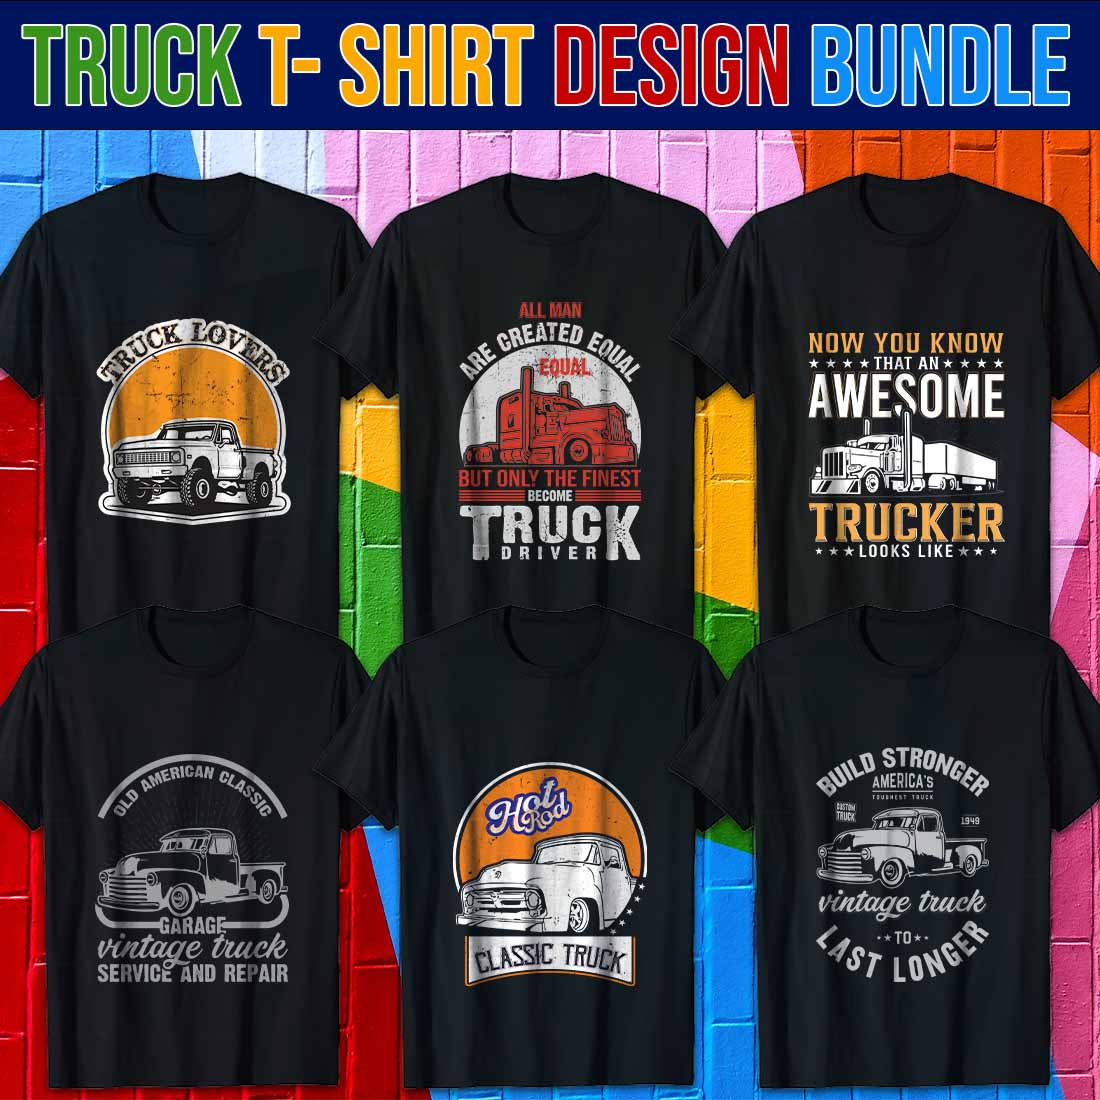 Truck Driver T-Shirt Design Bundle cover image.